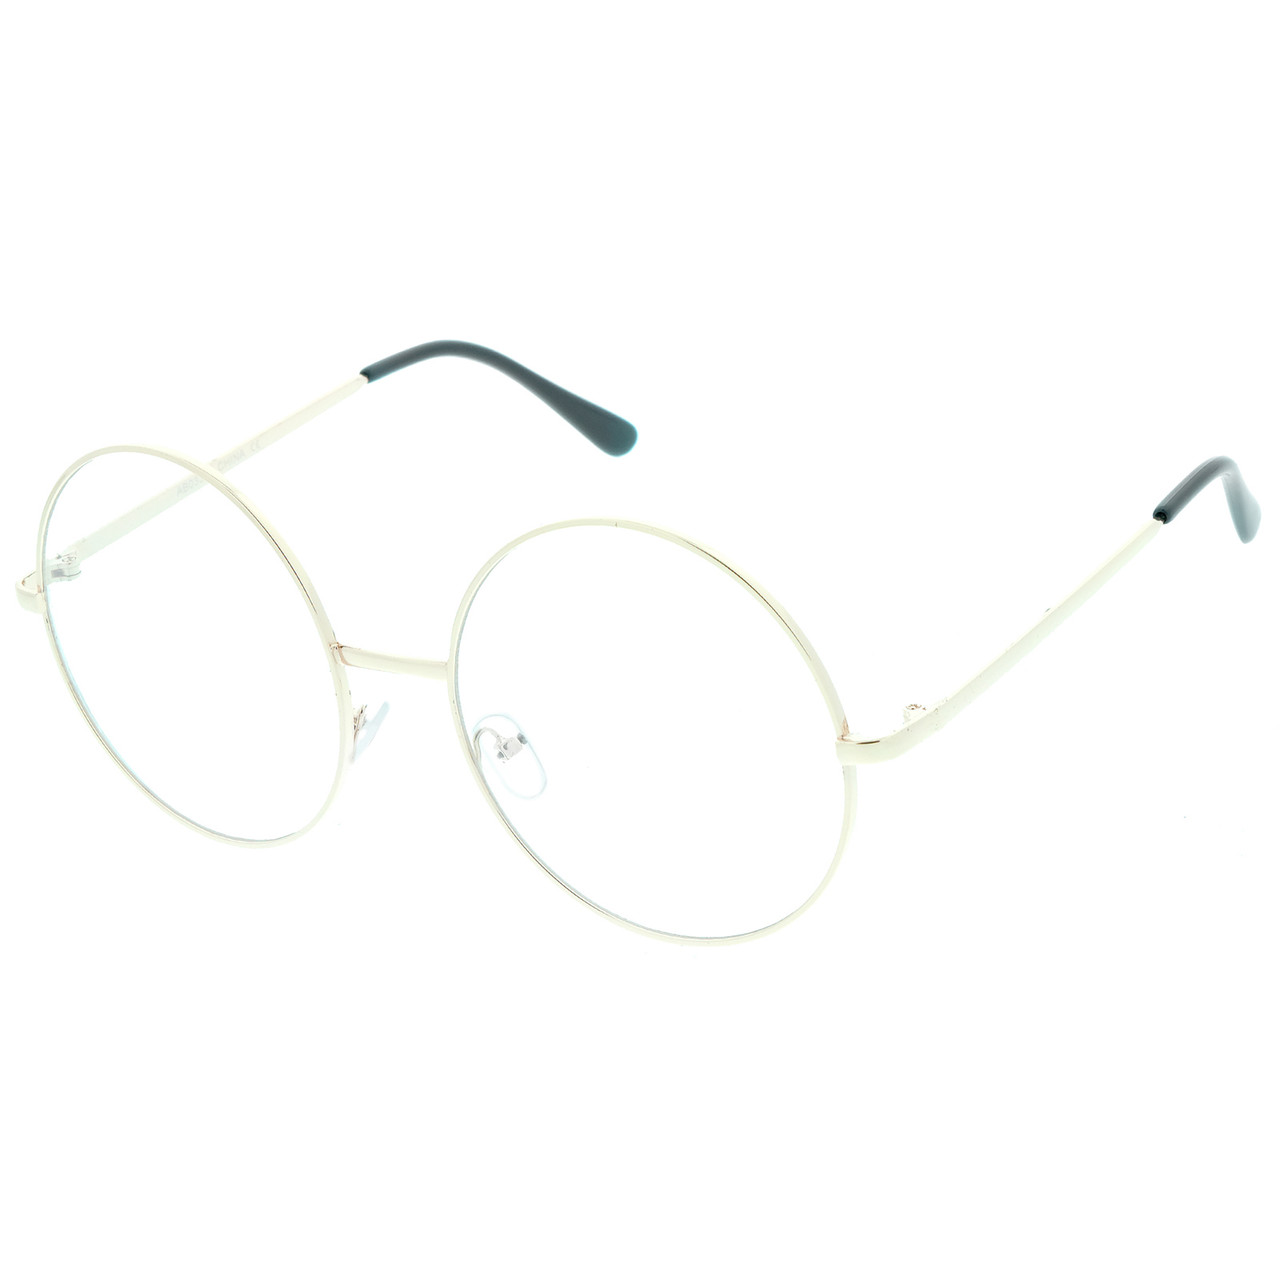 Charleston Eyeglasses | Vint and York